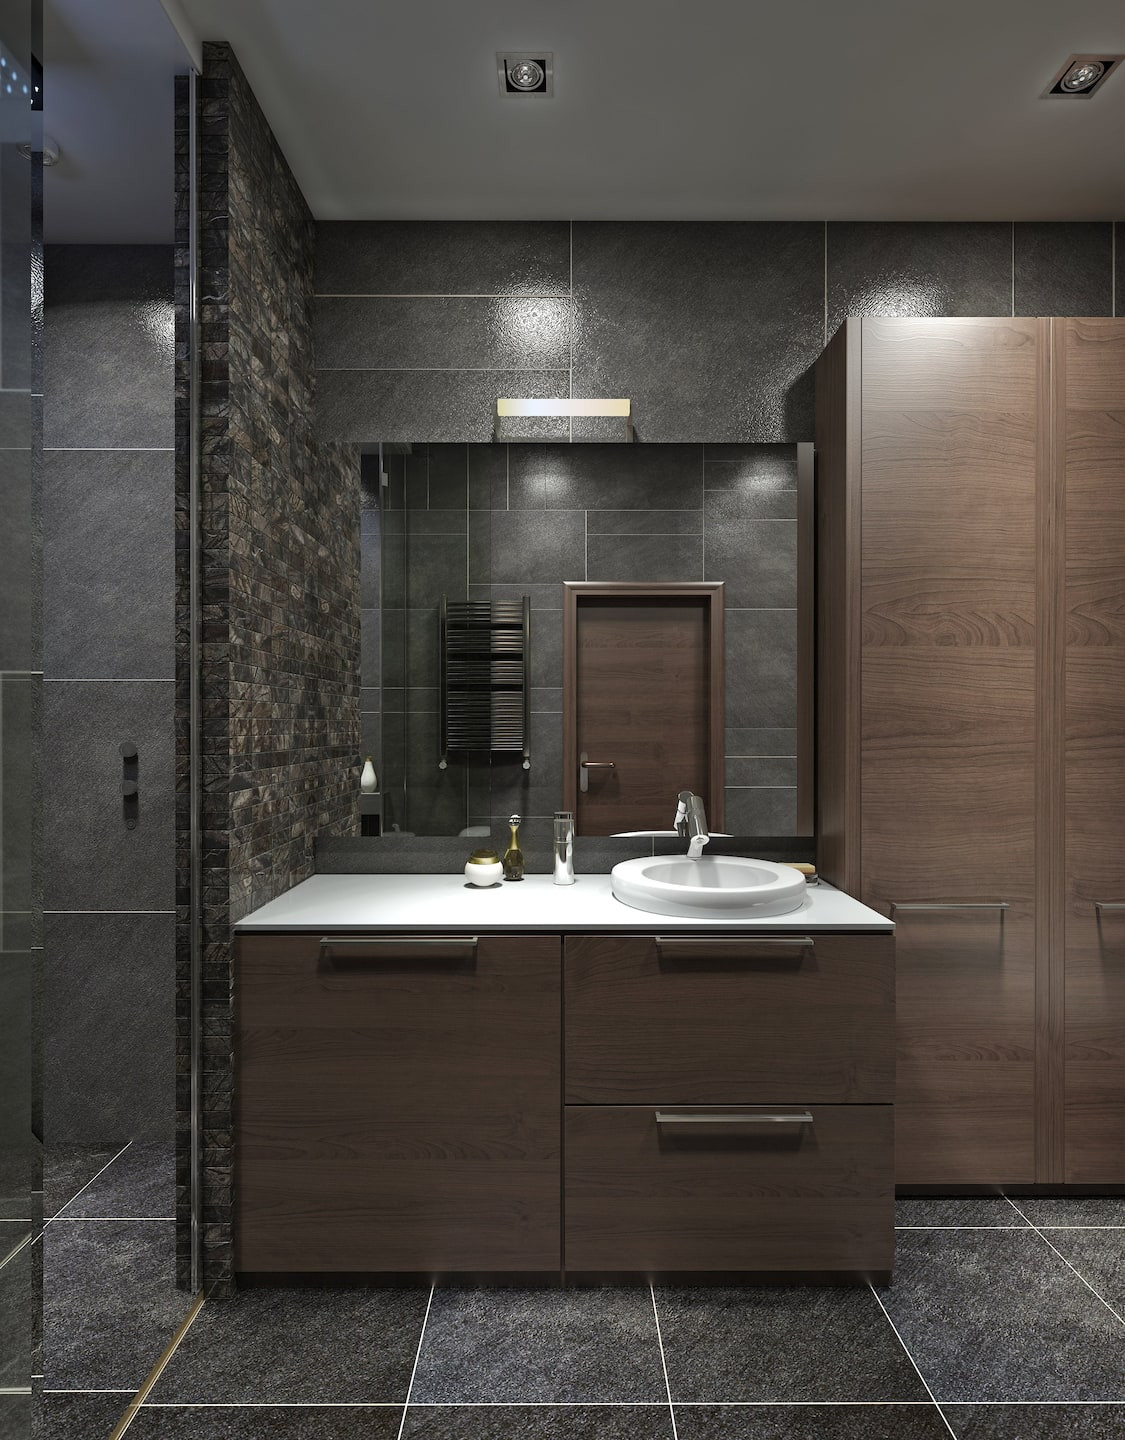 Bathroom Storage Cabinet Ideas
 12 Sensational Bathroom Cabinet Design Ideas